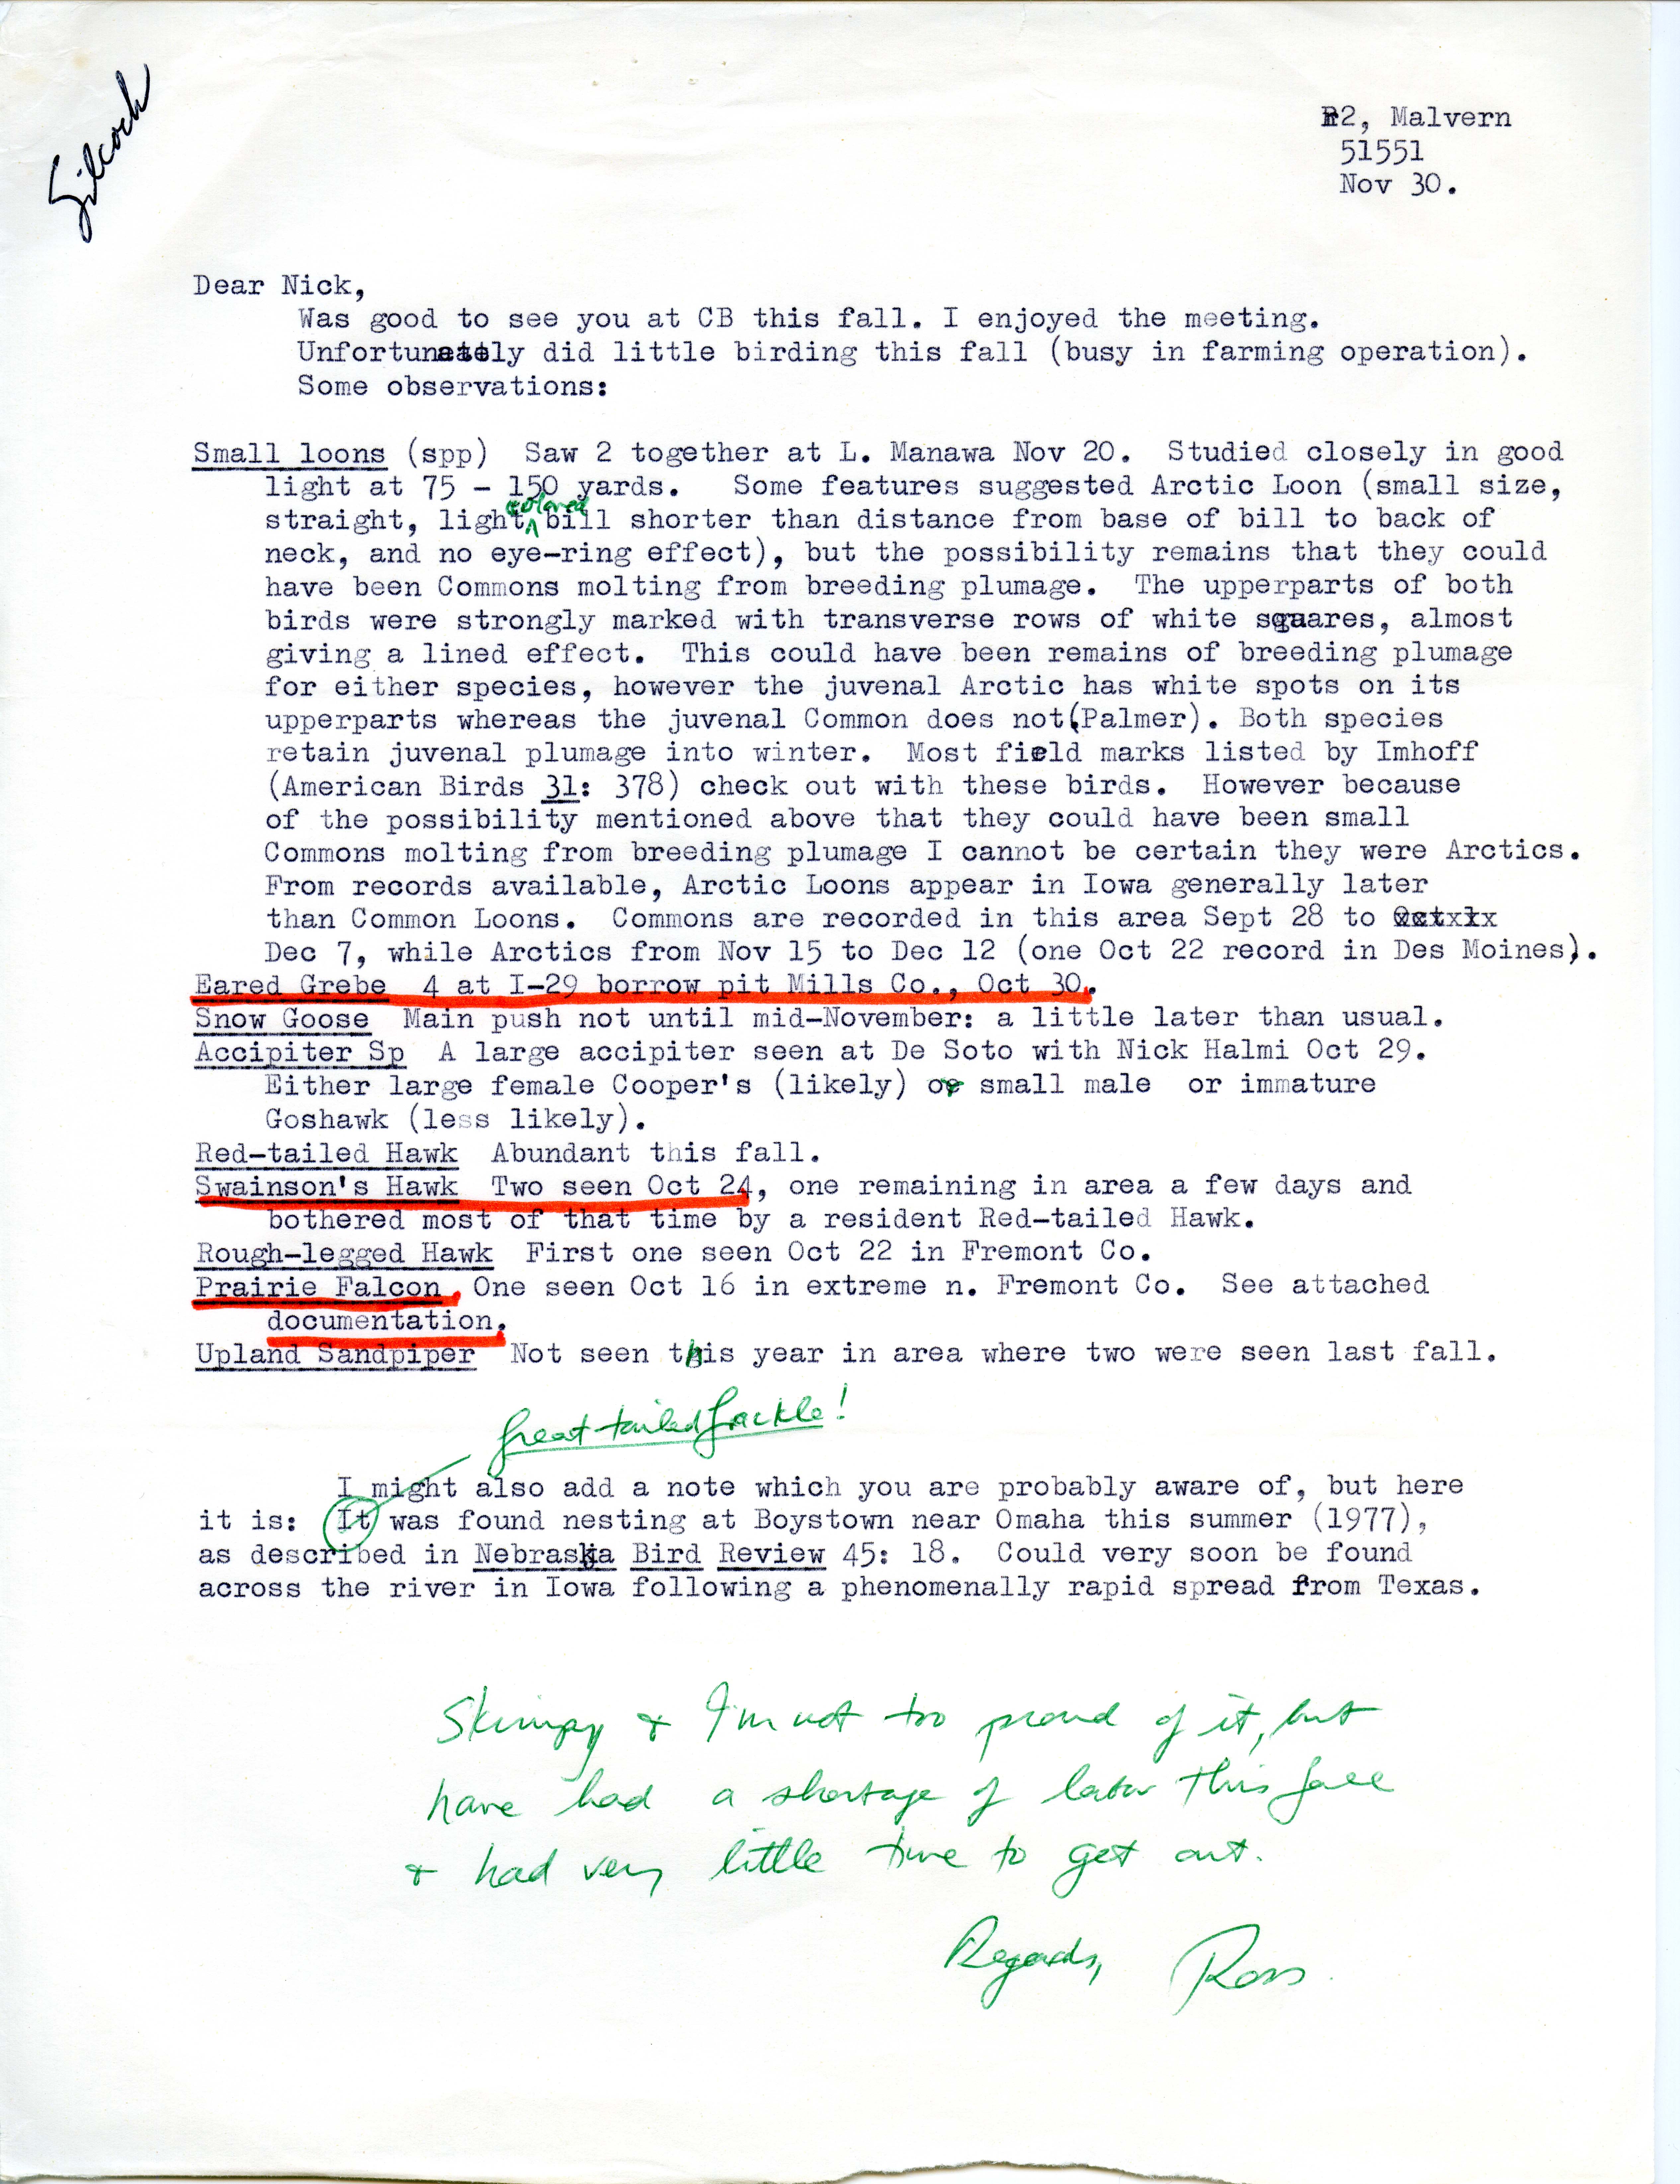 W. Ross Silcock letter to Nicholas S. Halmi regarding bird sightings, November 30, 1977